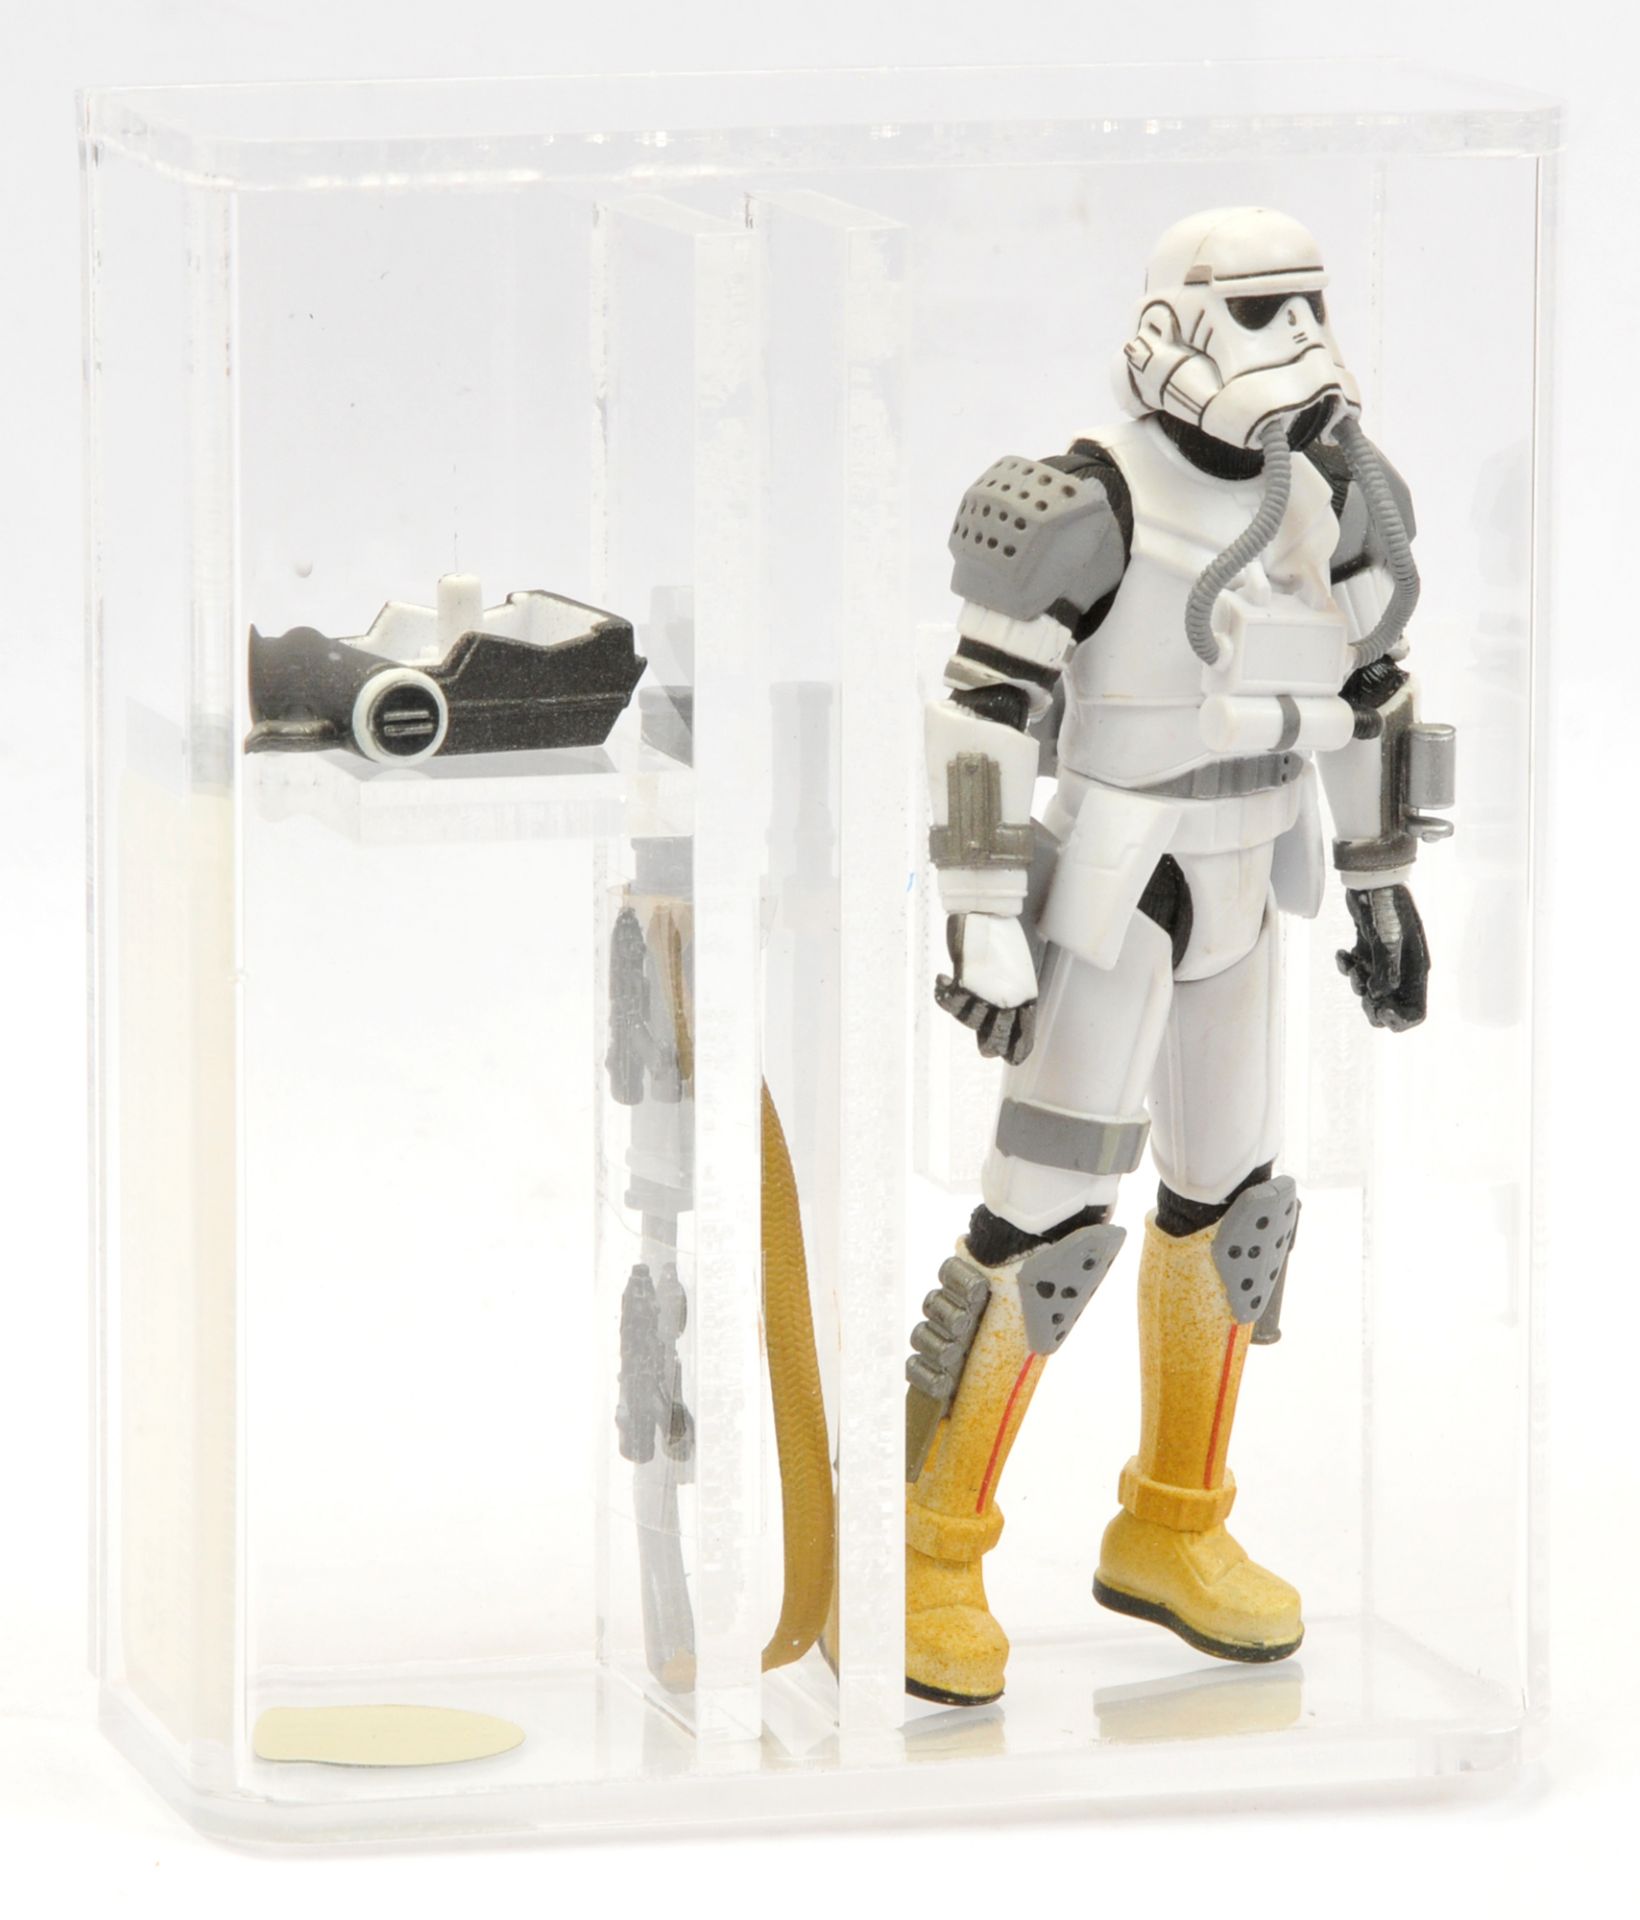 Hasbro Star Wars Imperial Evo Trooper AFA Grade 90 3 3/4" Action Figure - Image 2 of 3